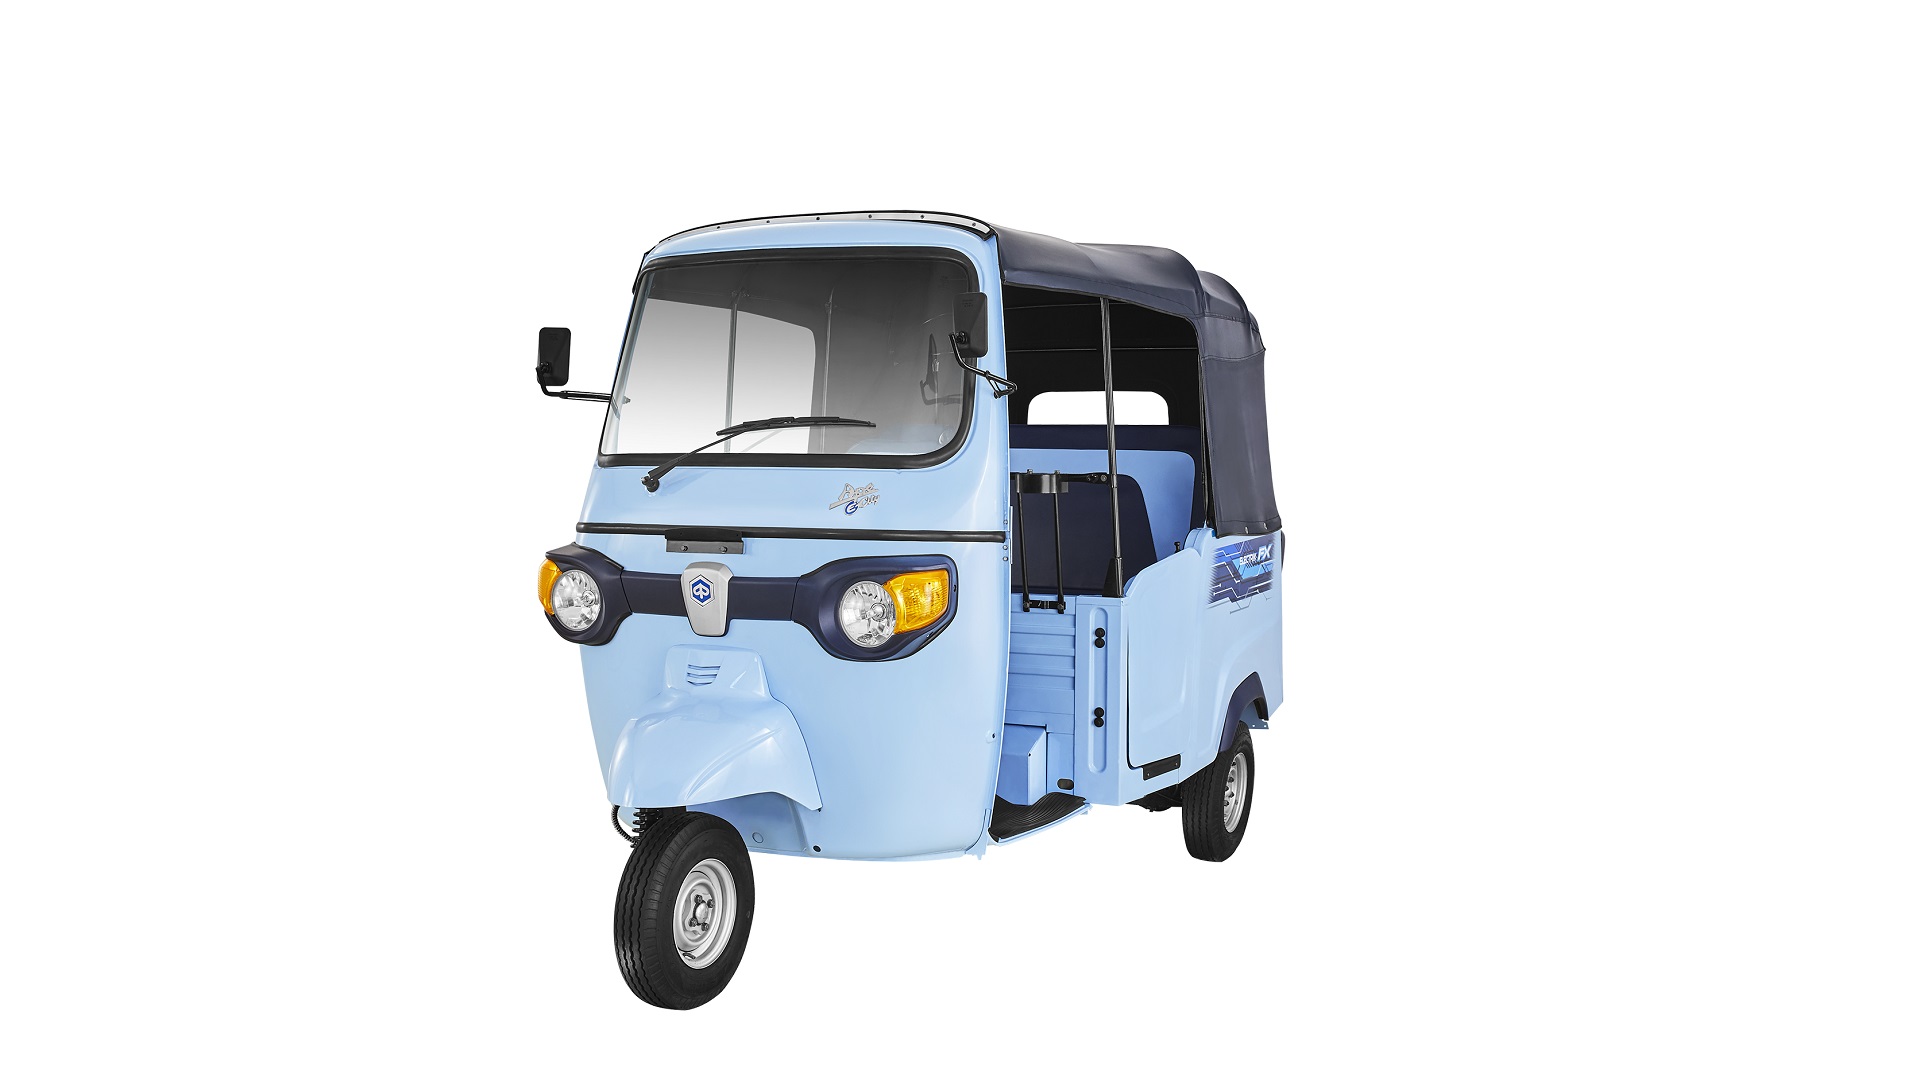 Piaggio showcases electric vehicles at the new EV zone in Gurugram